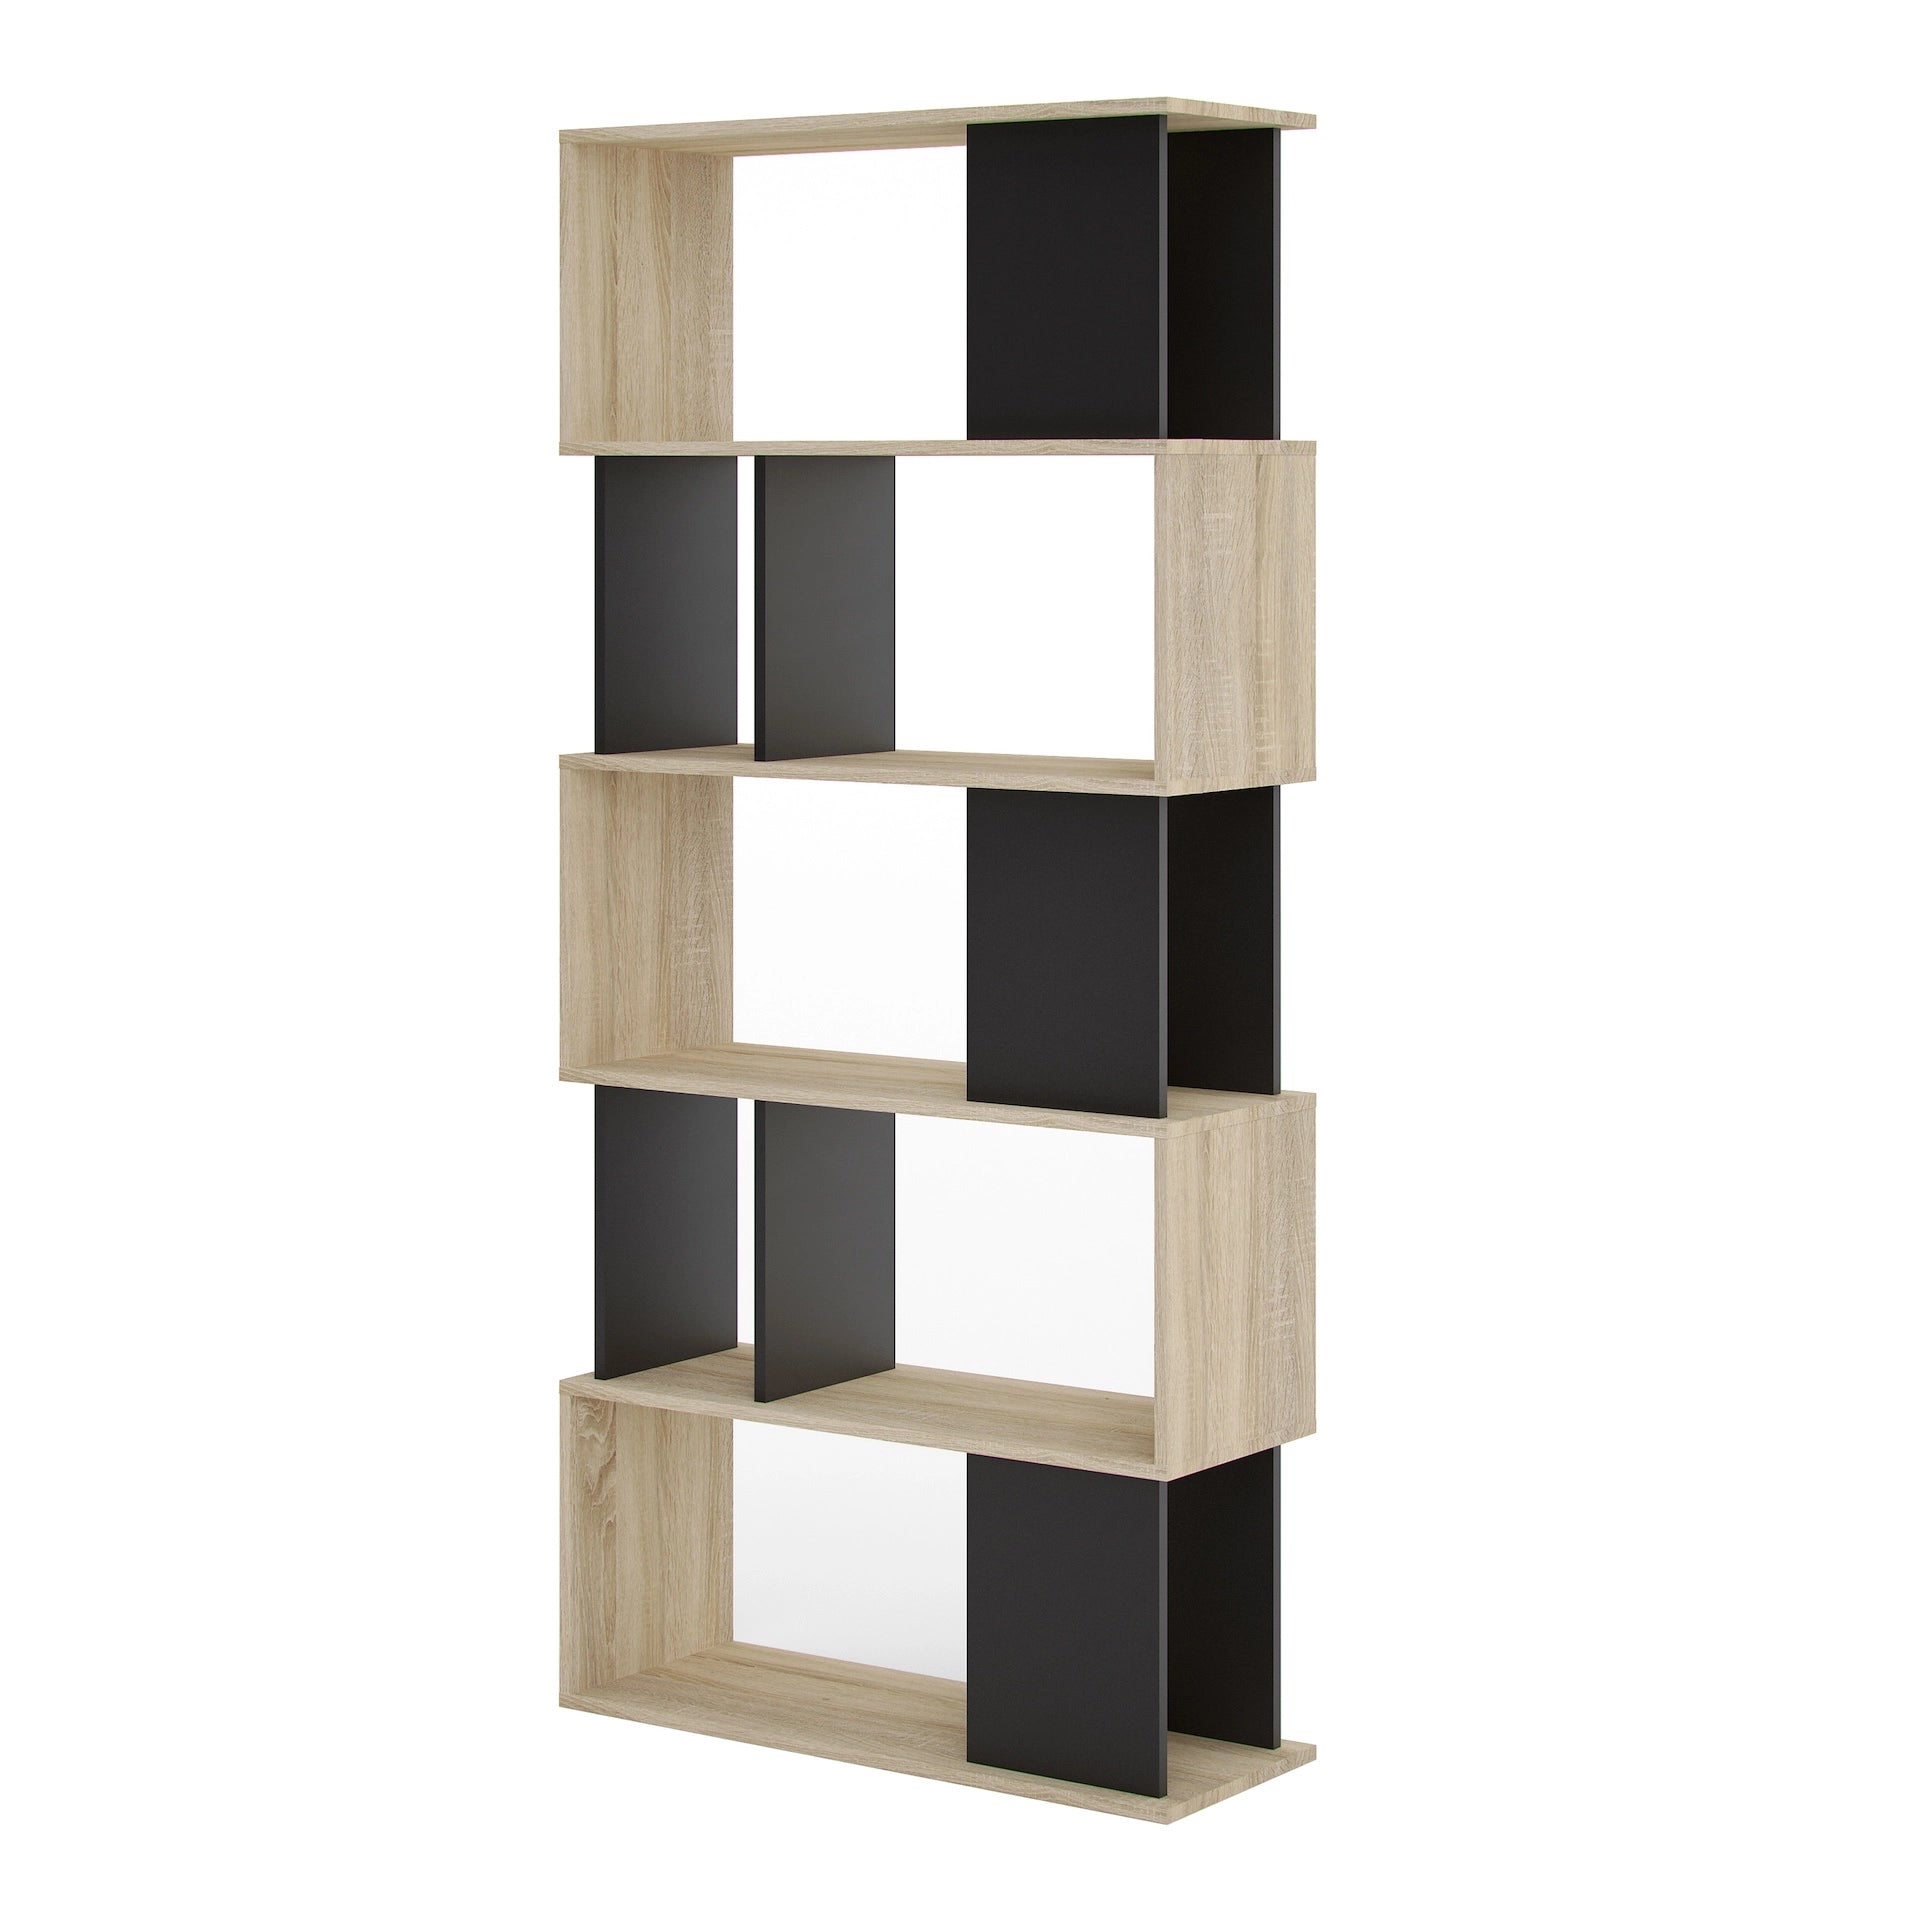 Furniture To Go Maze Open Bookcase 4 Shelves in Oak & Black